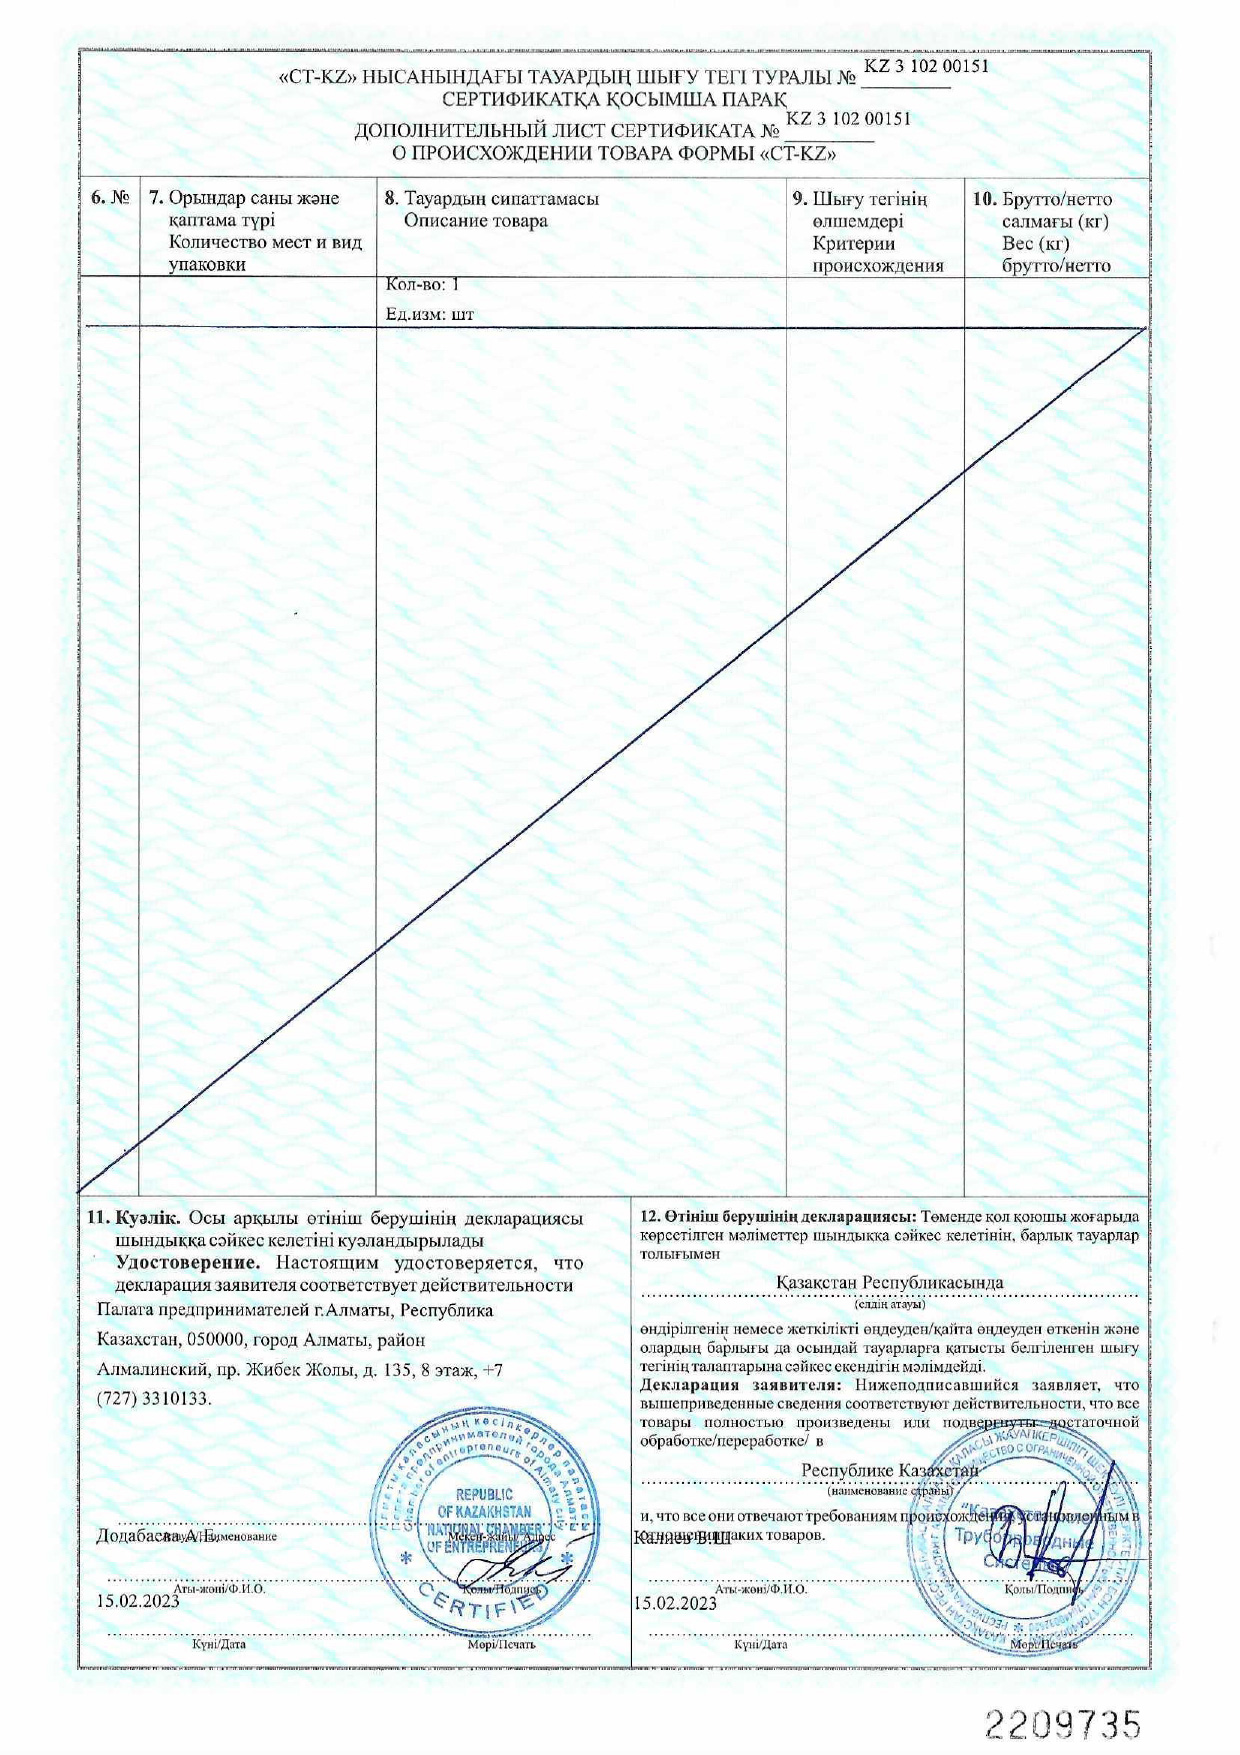 certificate image